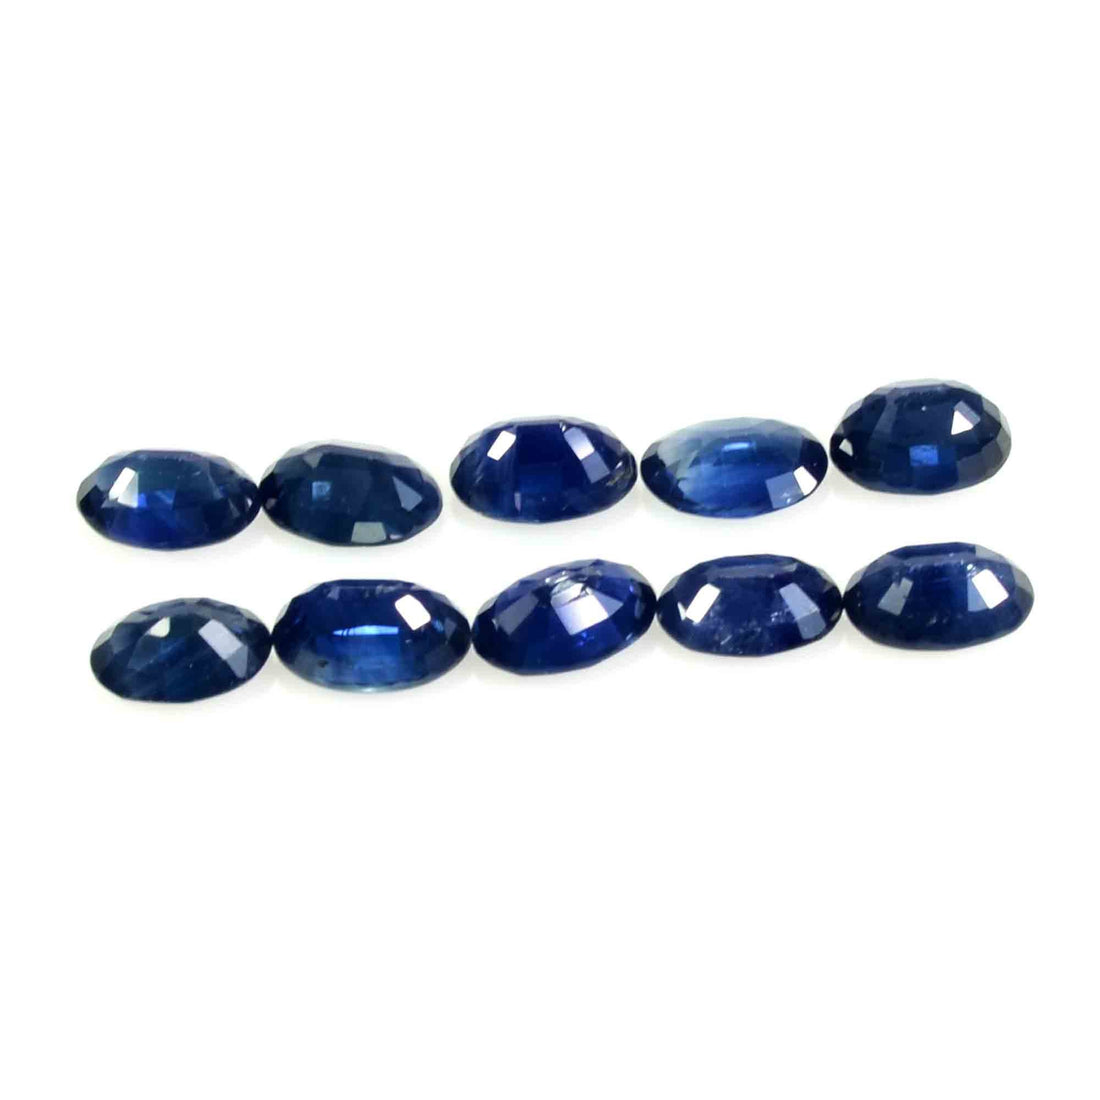 6x4 MM Natural Blue Sapphire Loose Gemstone Oval Cut